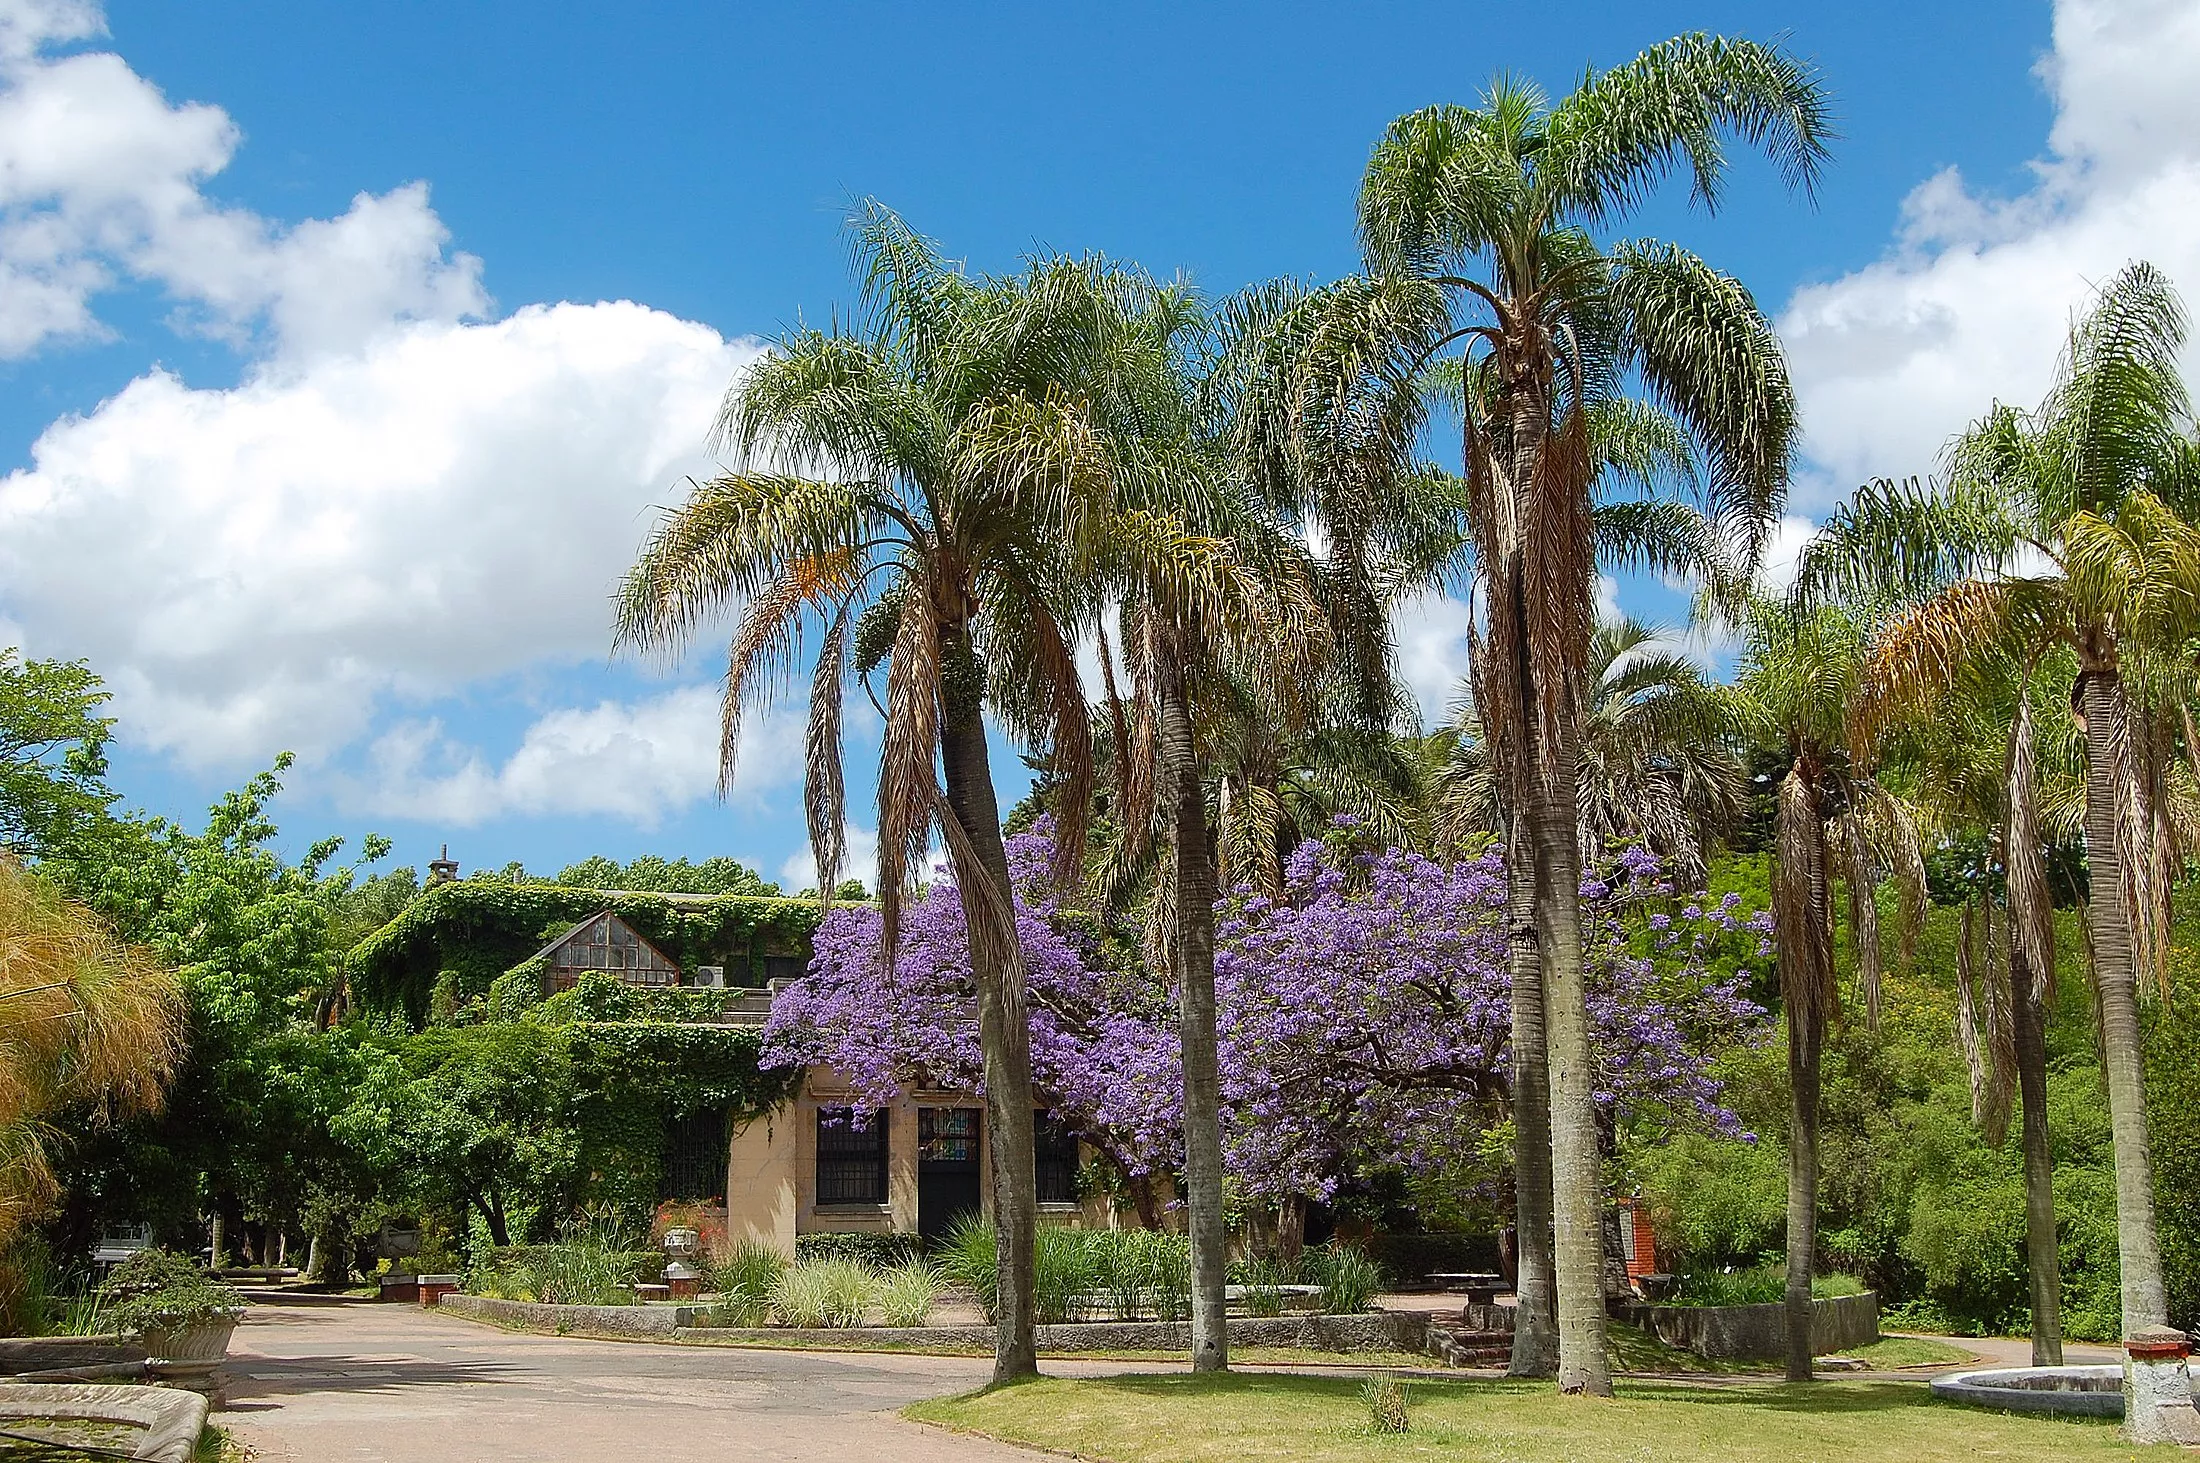 Jardin Botanico in Uruguay, South America | Botanical Gardens - Rated 4.4